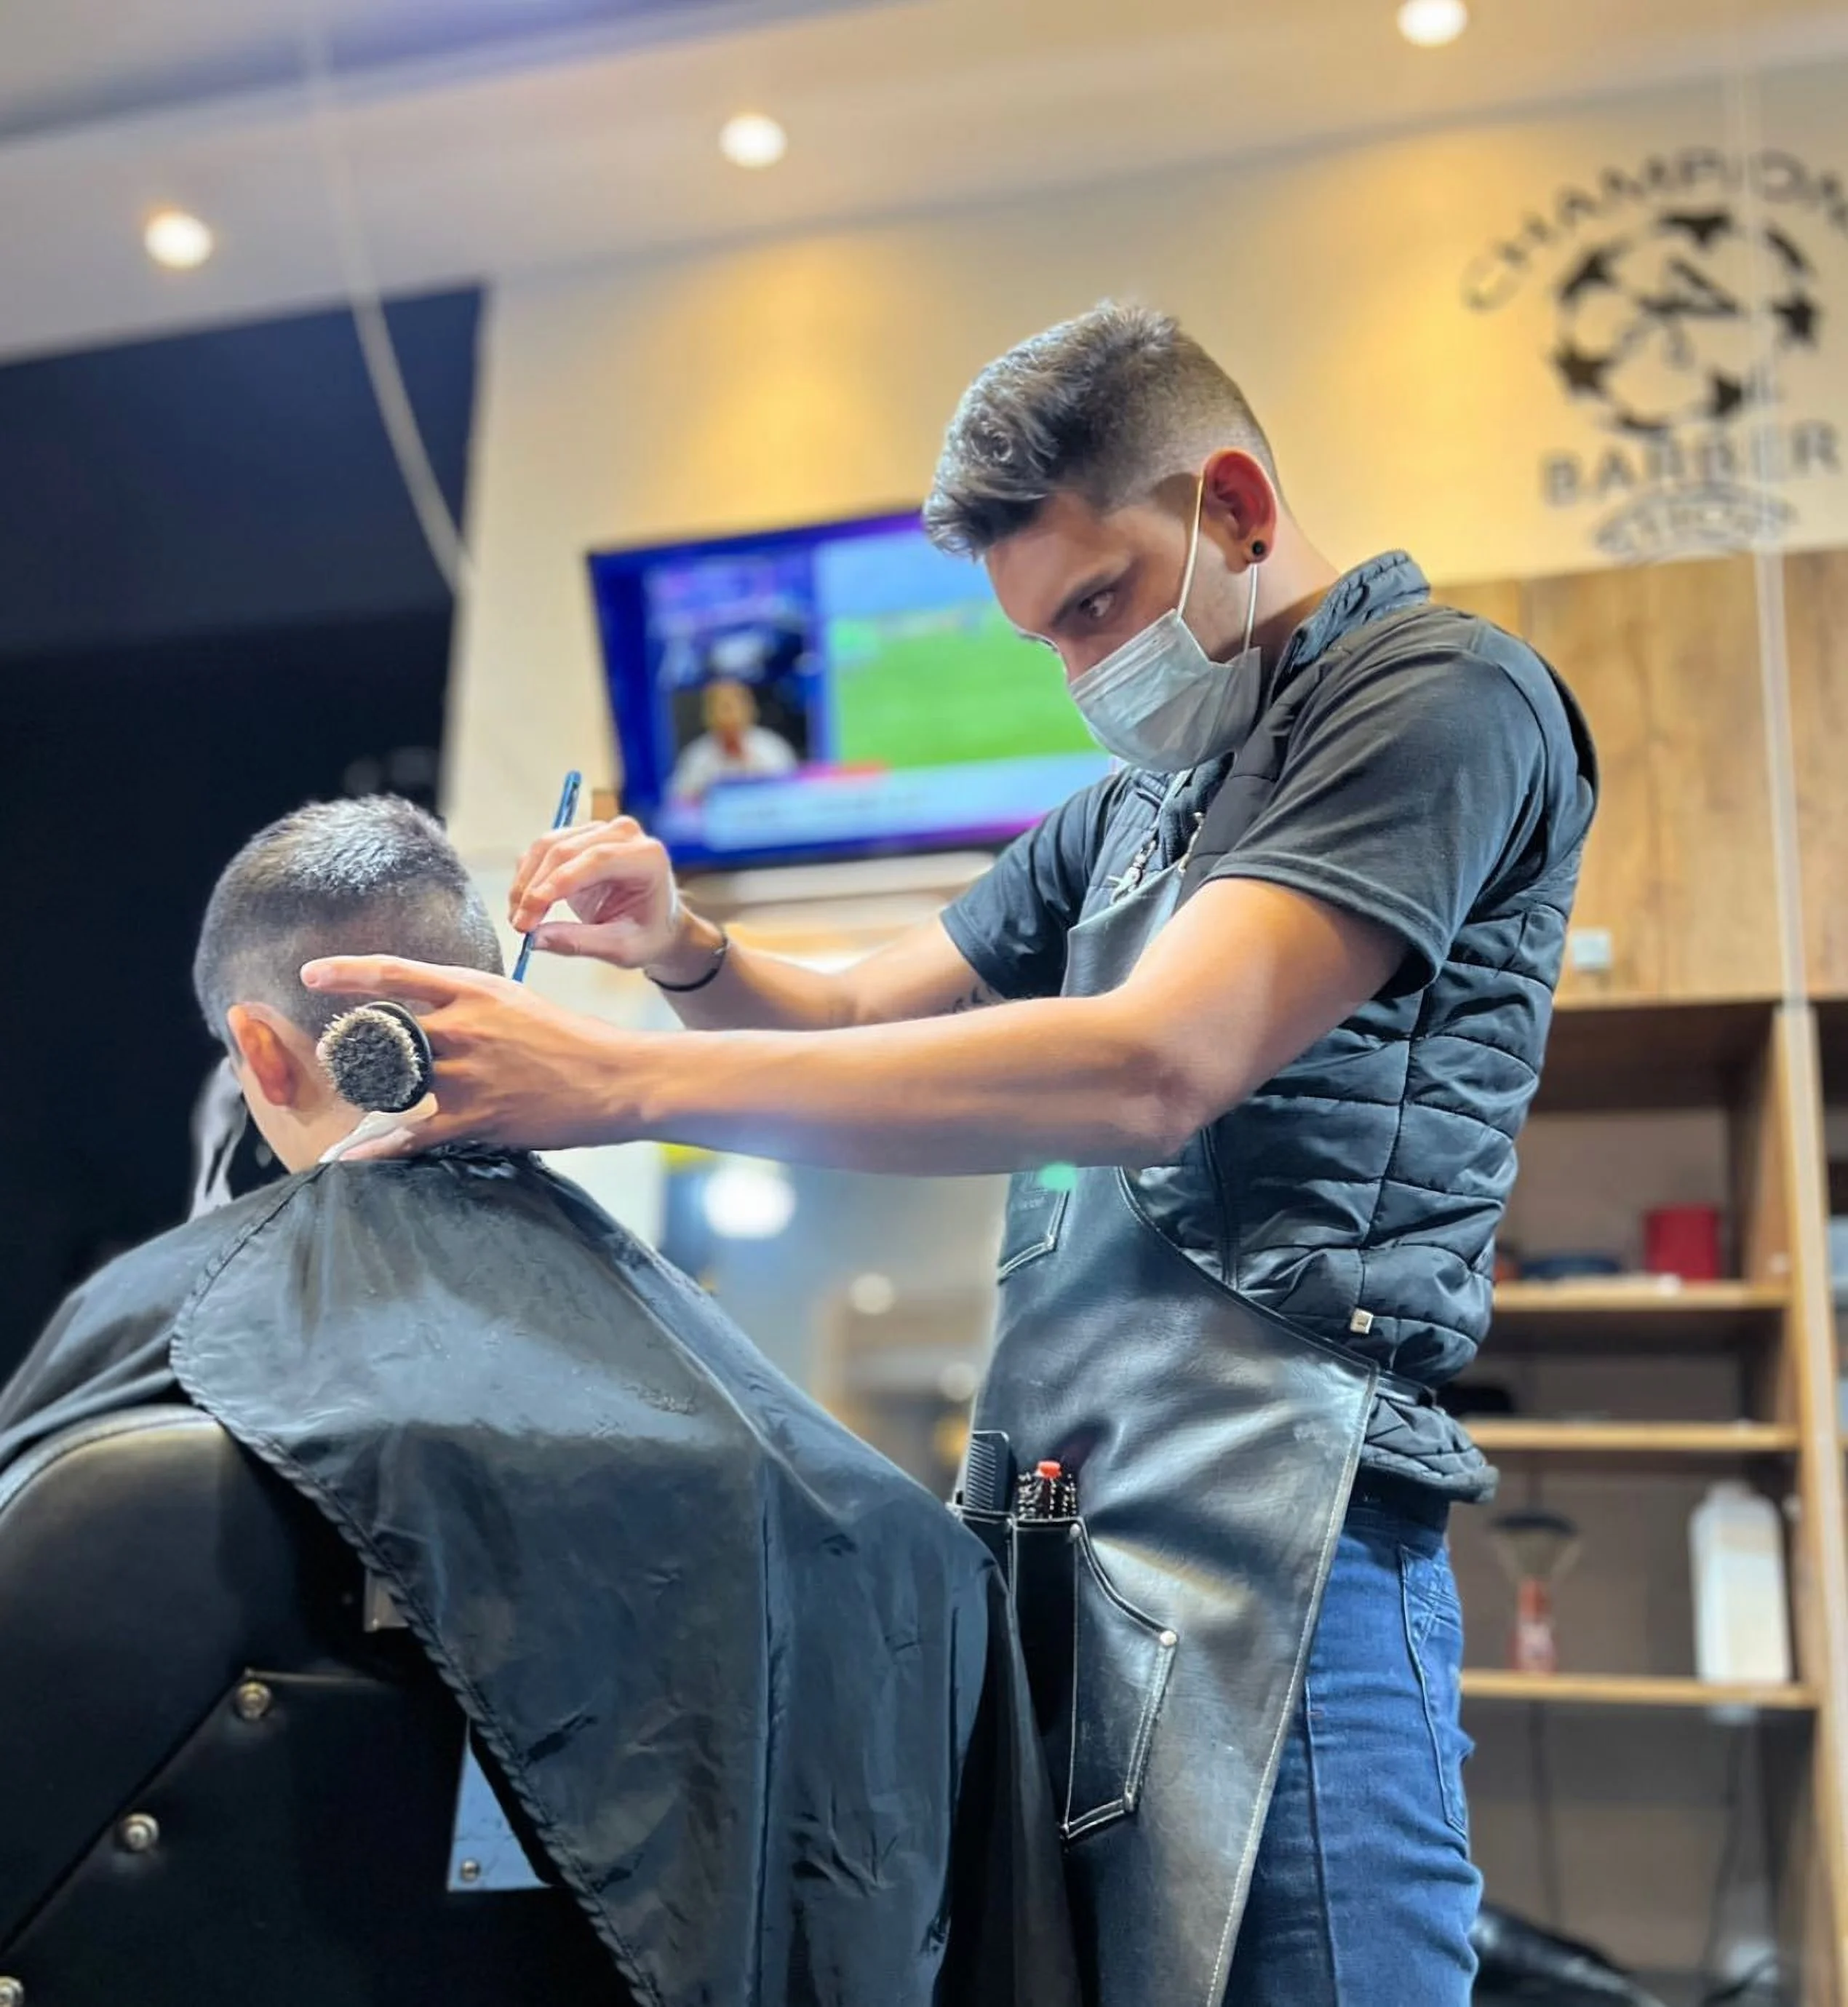 Barbería-champions-barber-shop-12859